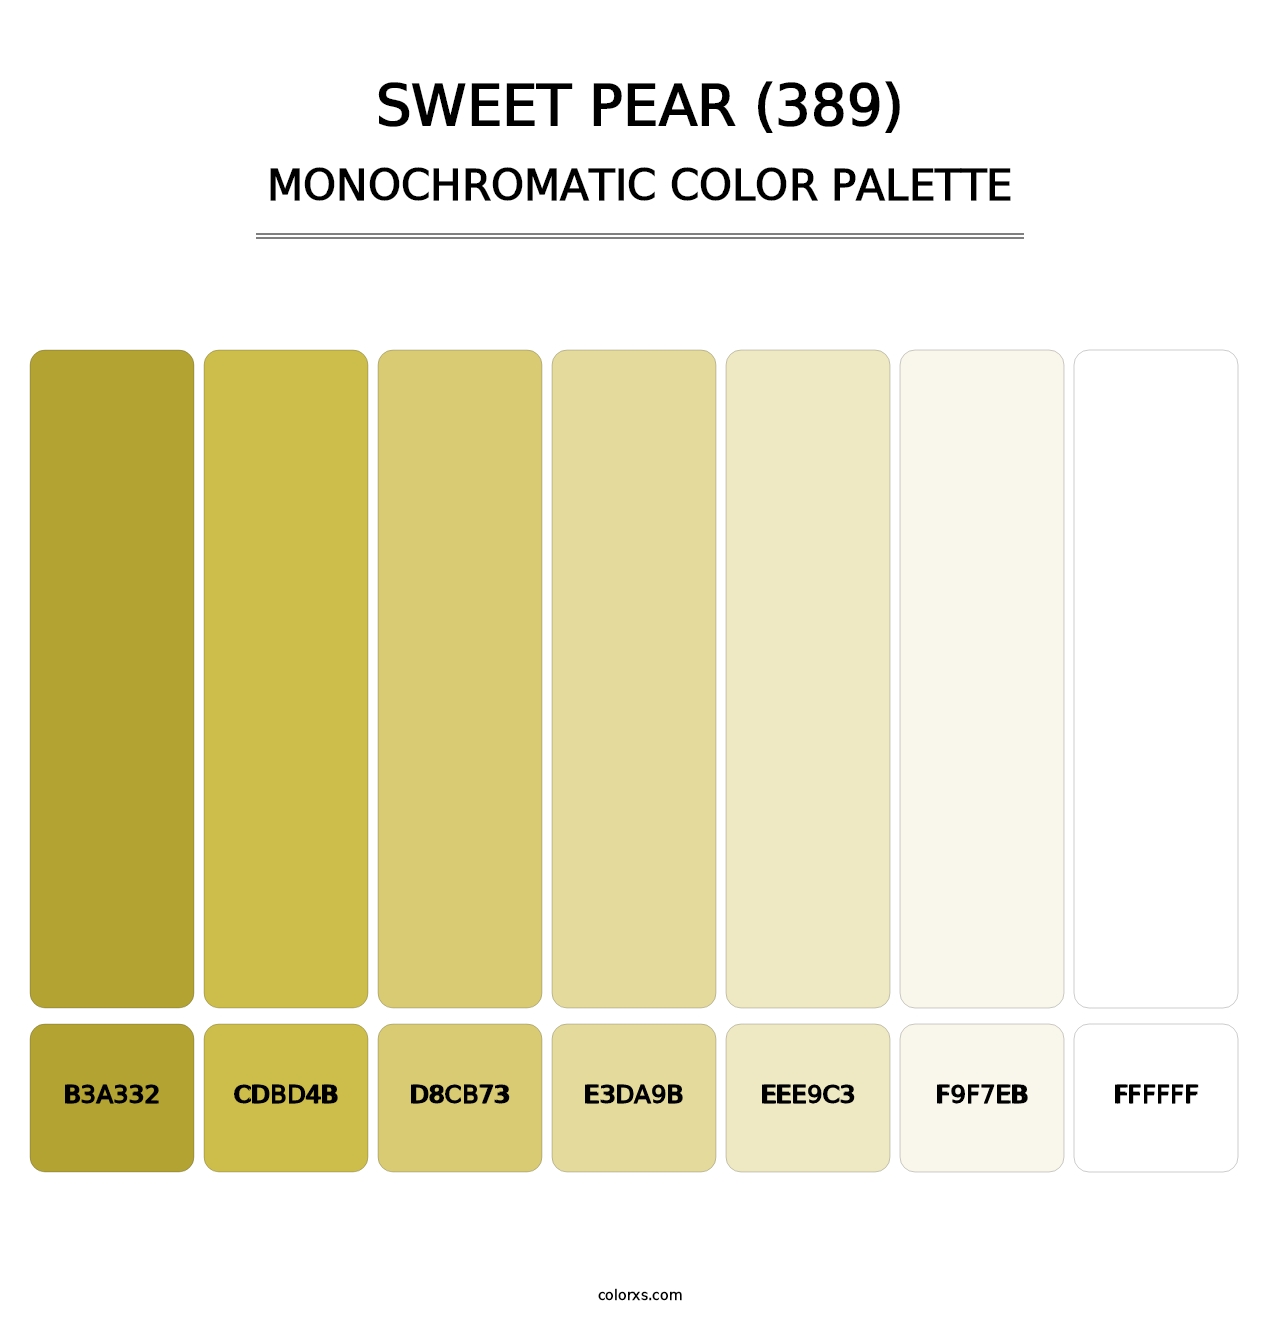 Sweet Pear (389) - Monochromatic Color Palette